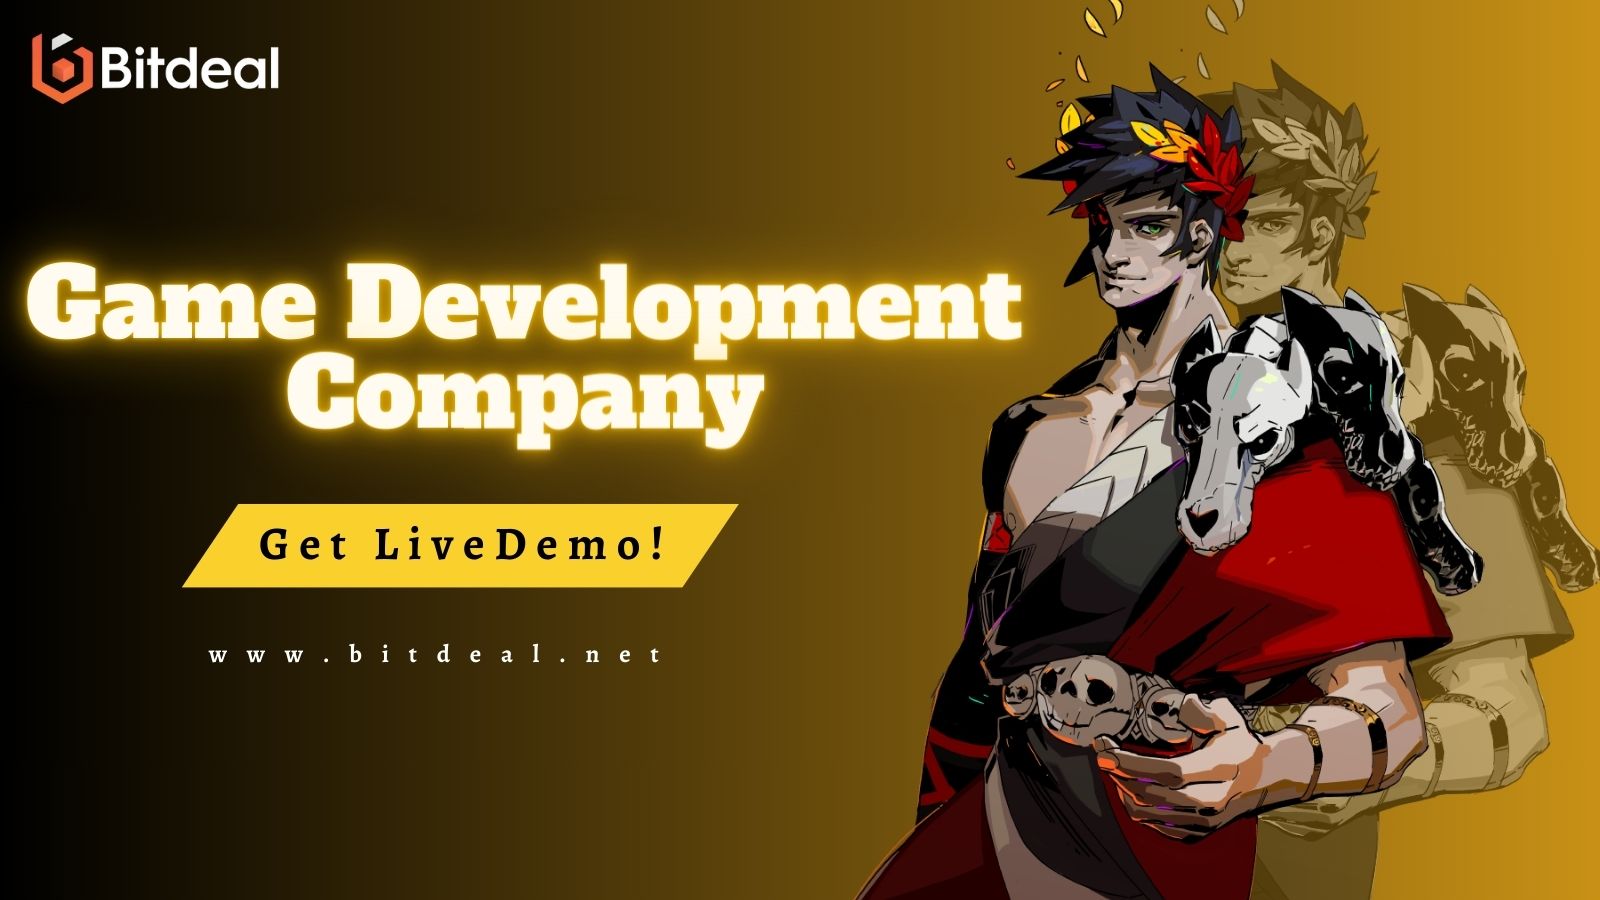 Bitdeal’s unique Game Development Services